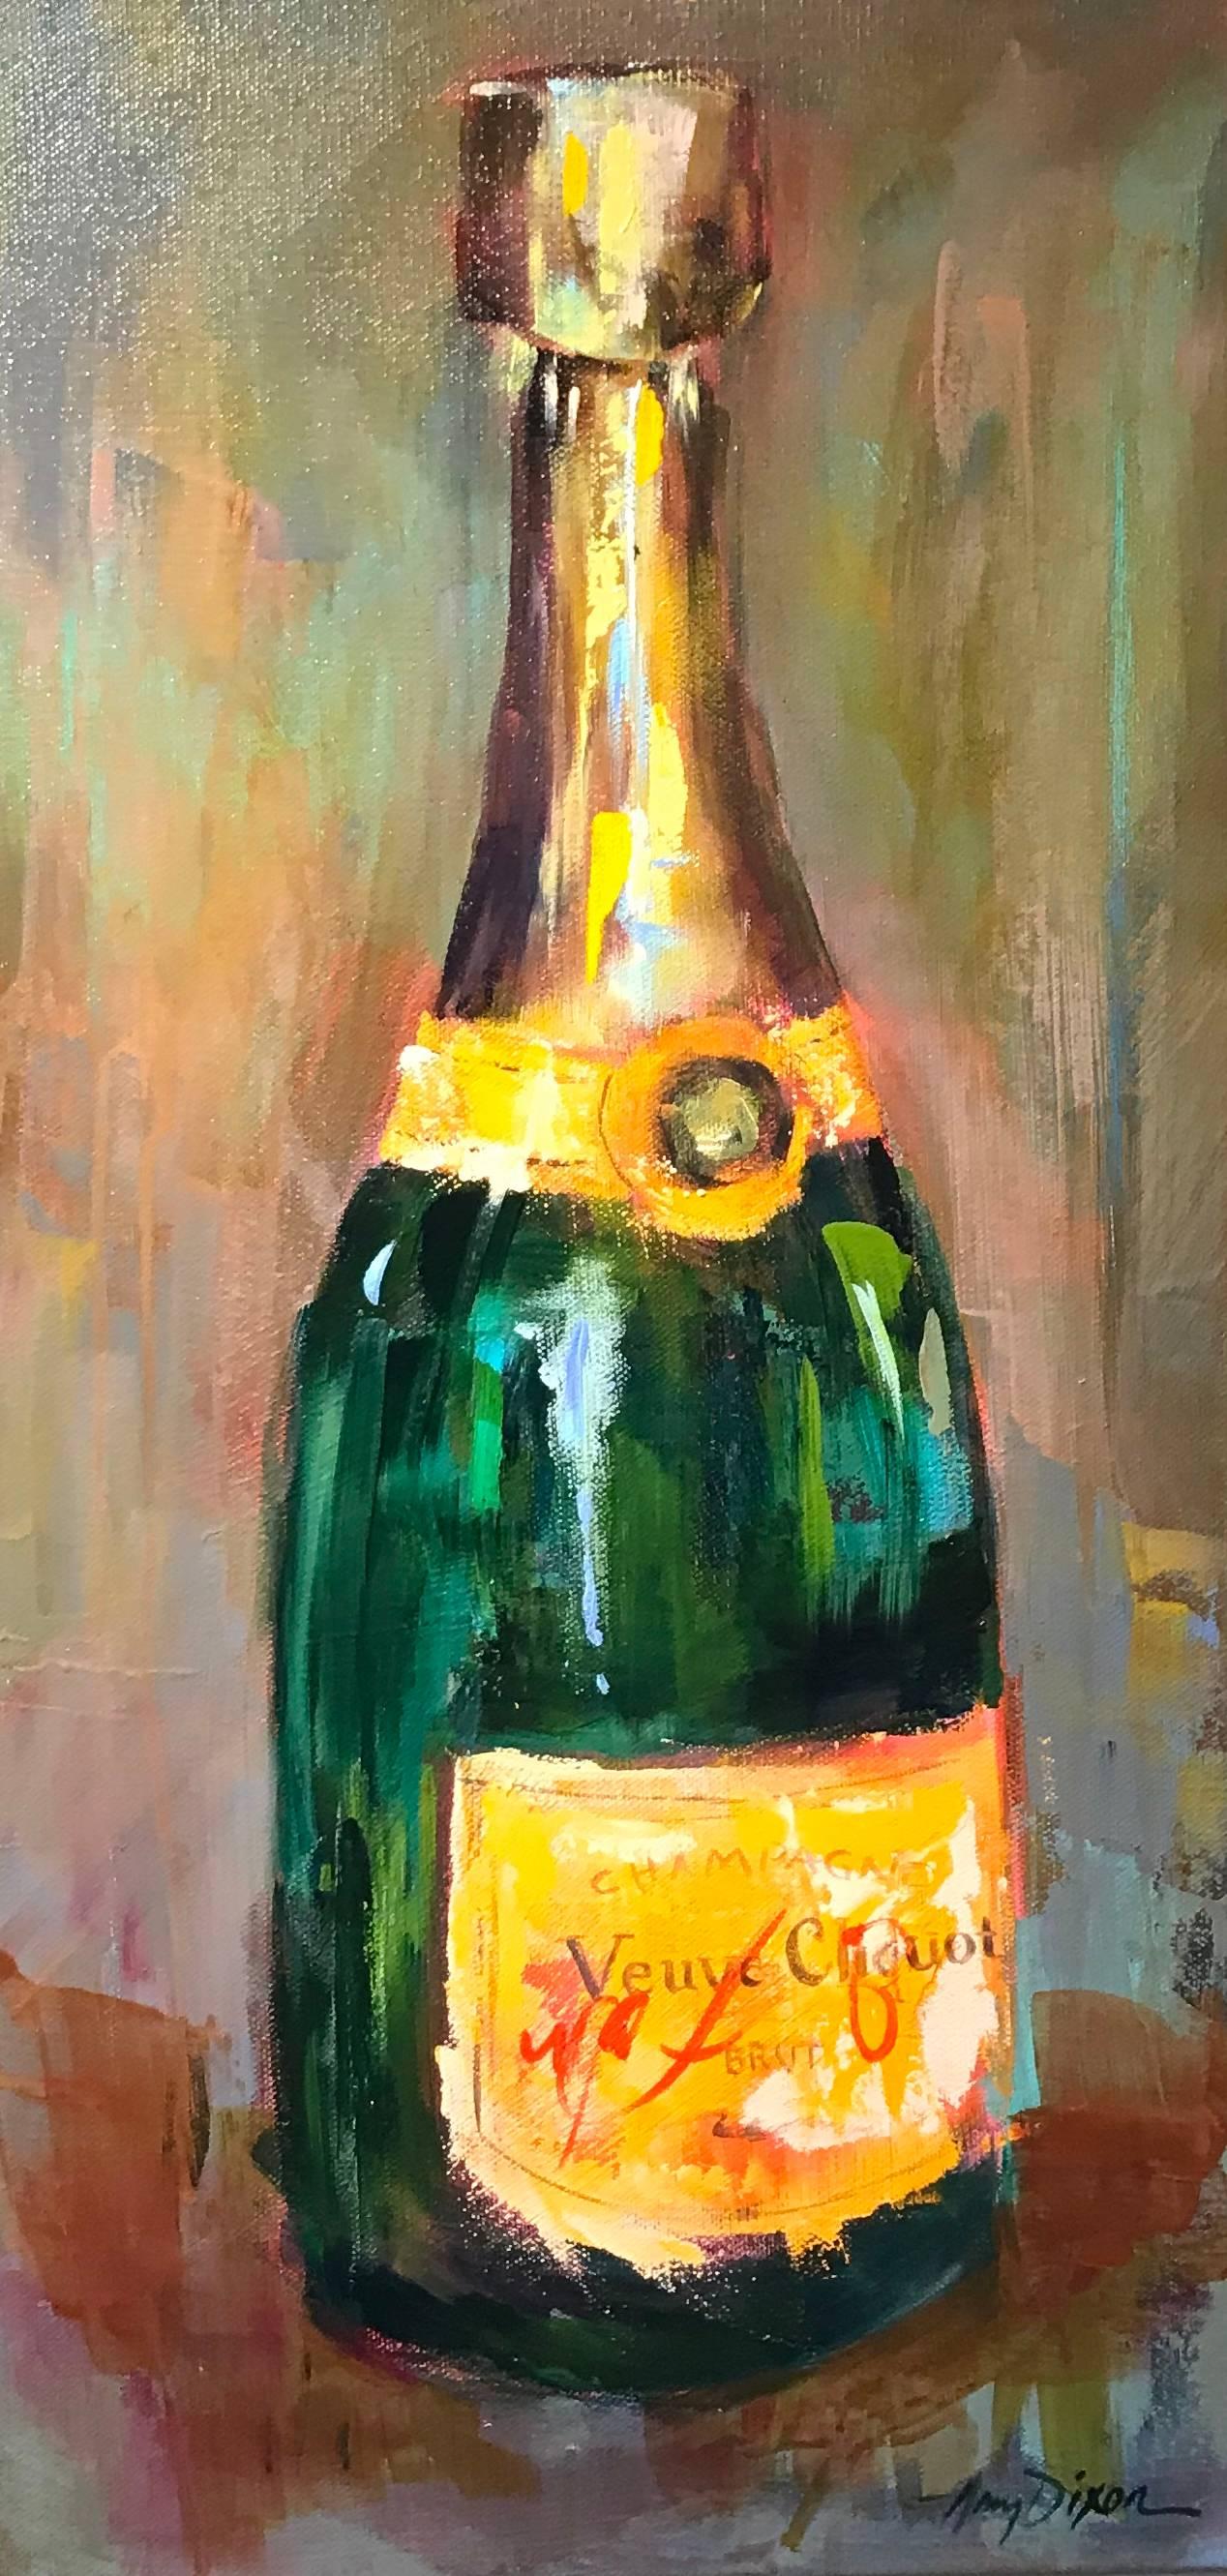 Amy Dixon Still-Life Painting - "Veuve" Small Post-Impressionist Acrylic on Canvas Veuve Champagne Bottle